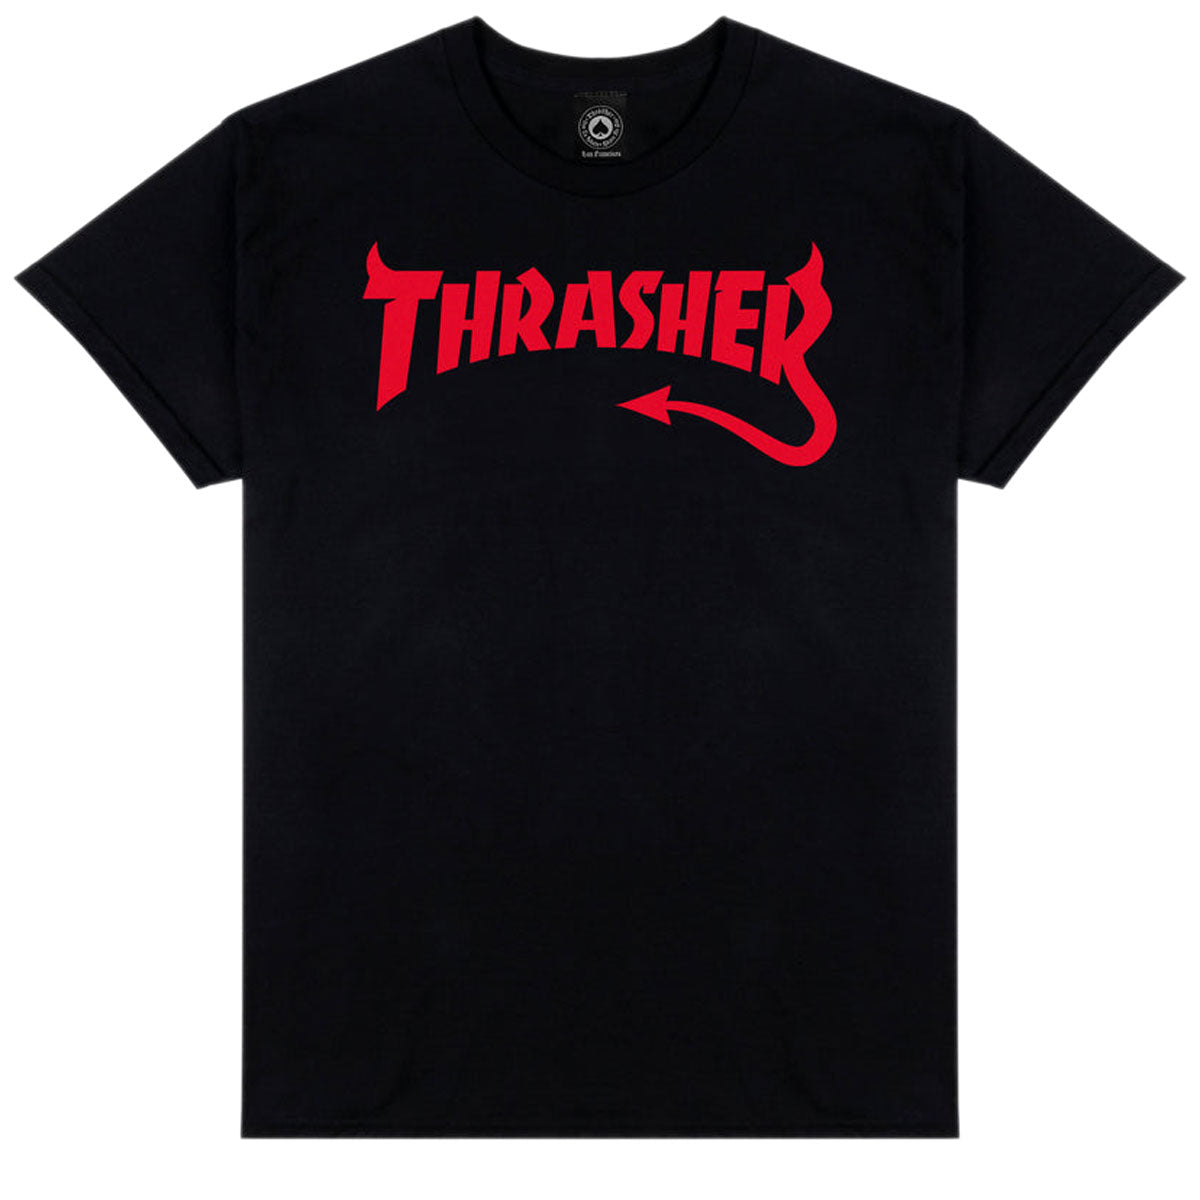 Thrasher Diablo T-Shirt - Black image 1